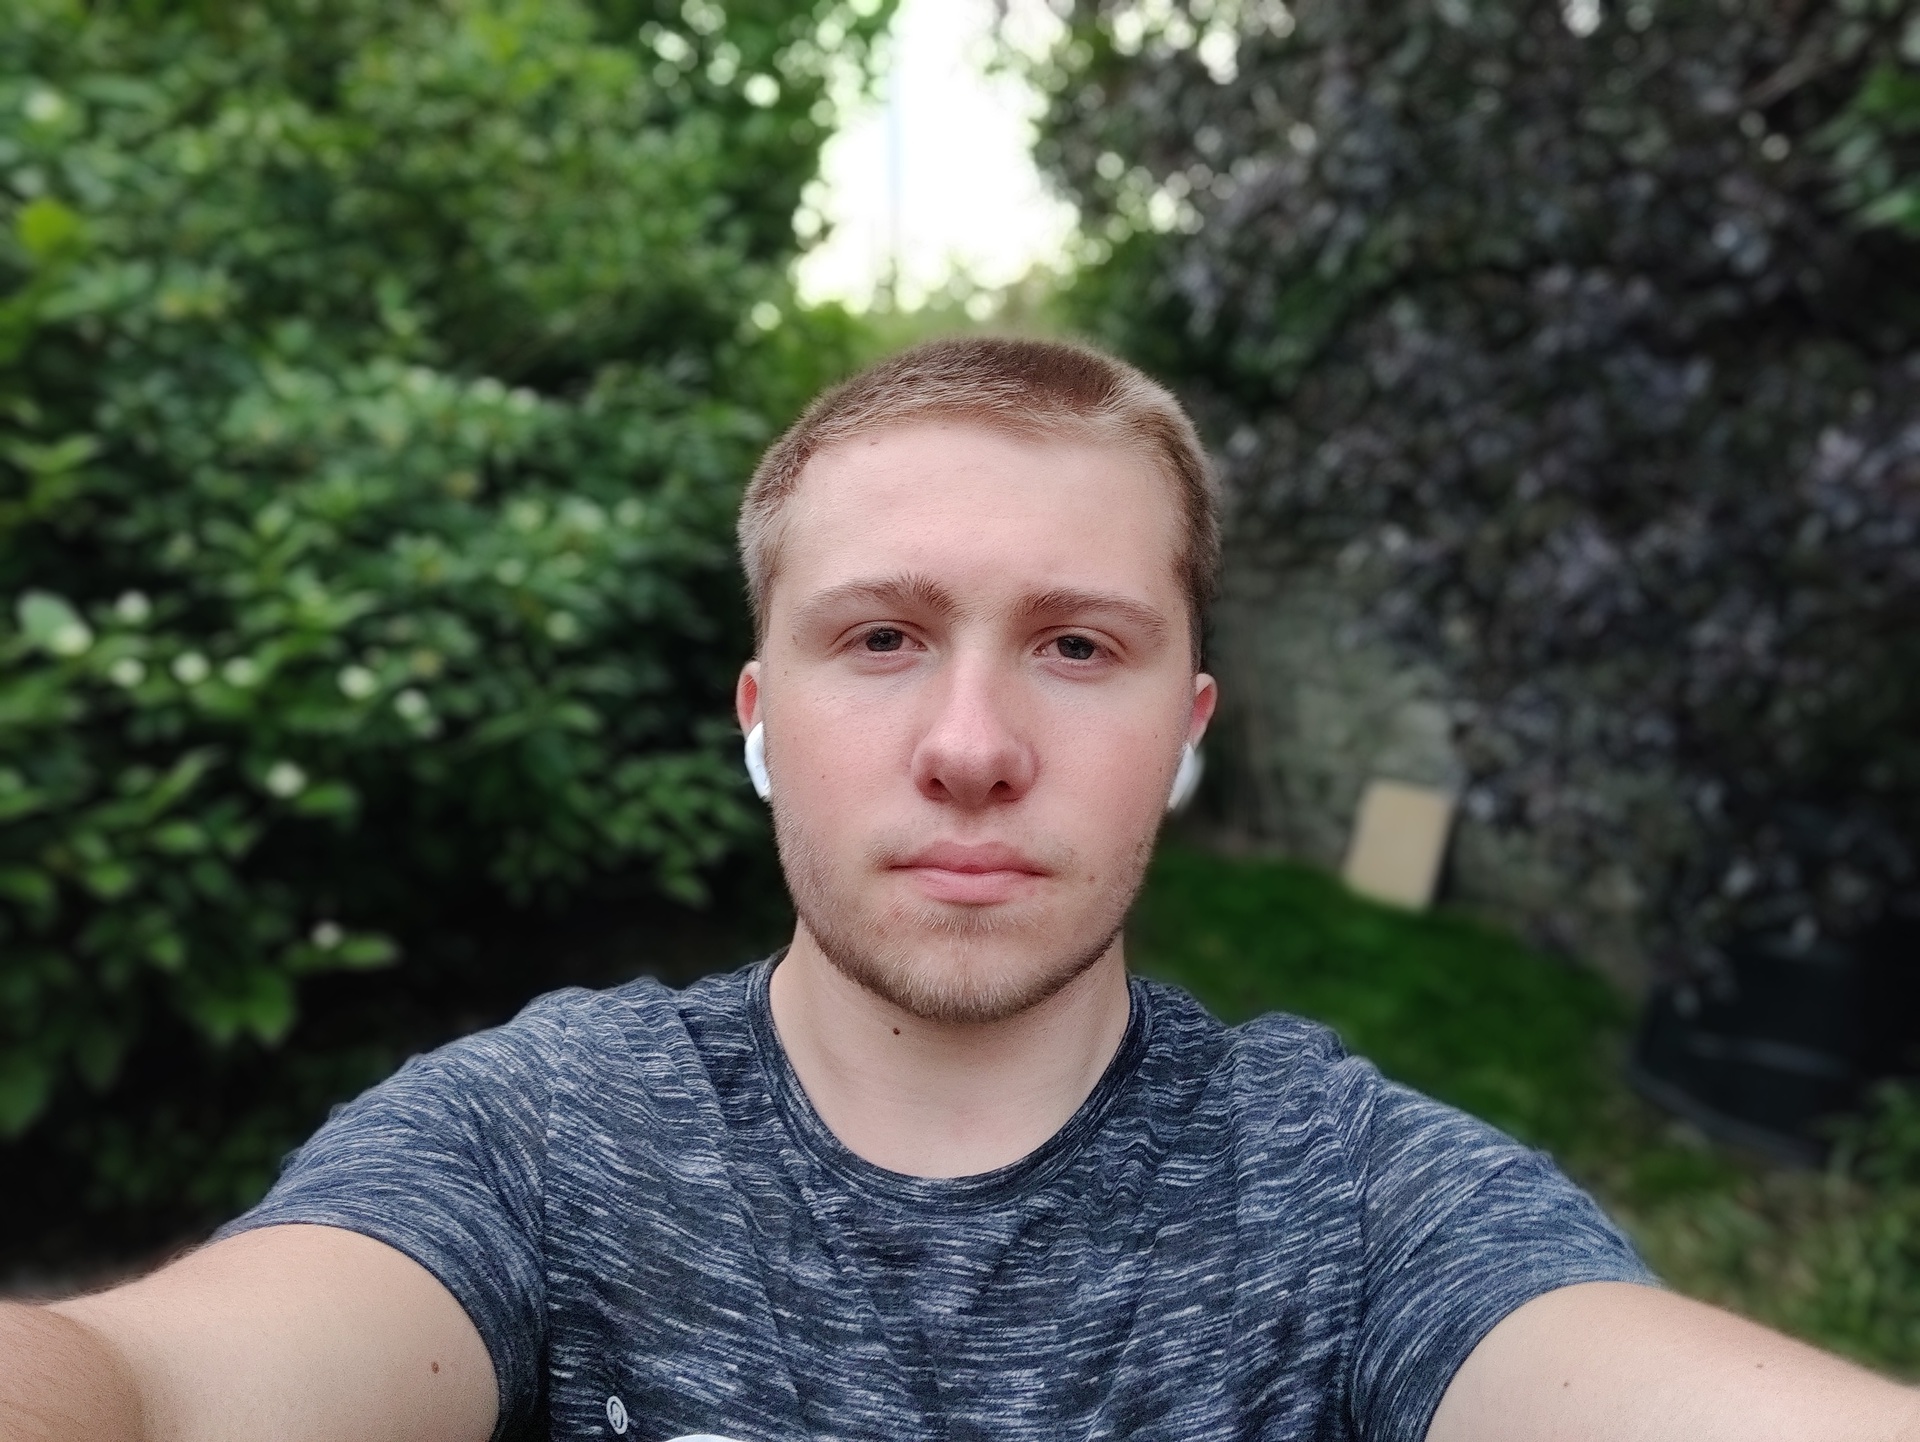 OnePlus Nord test image portrait mode selfie in garden